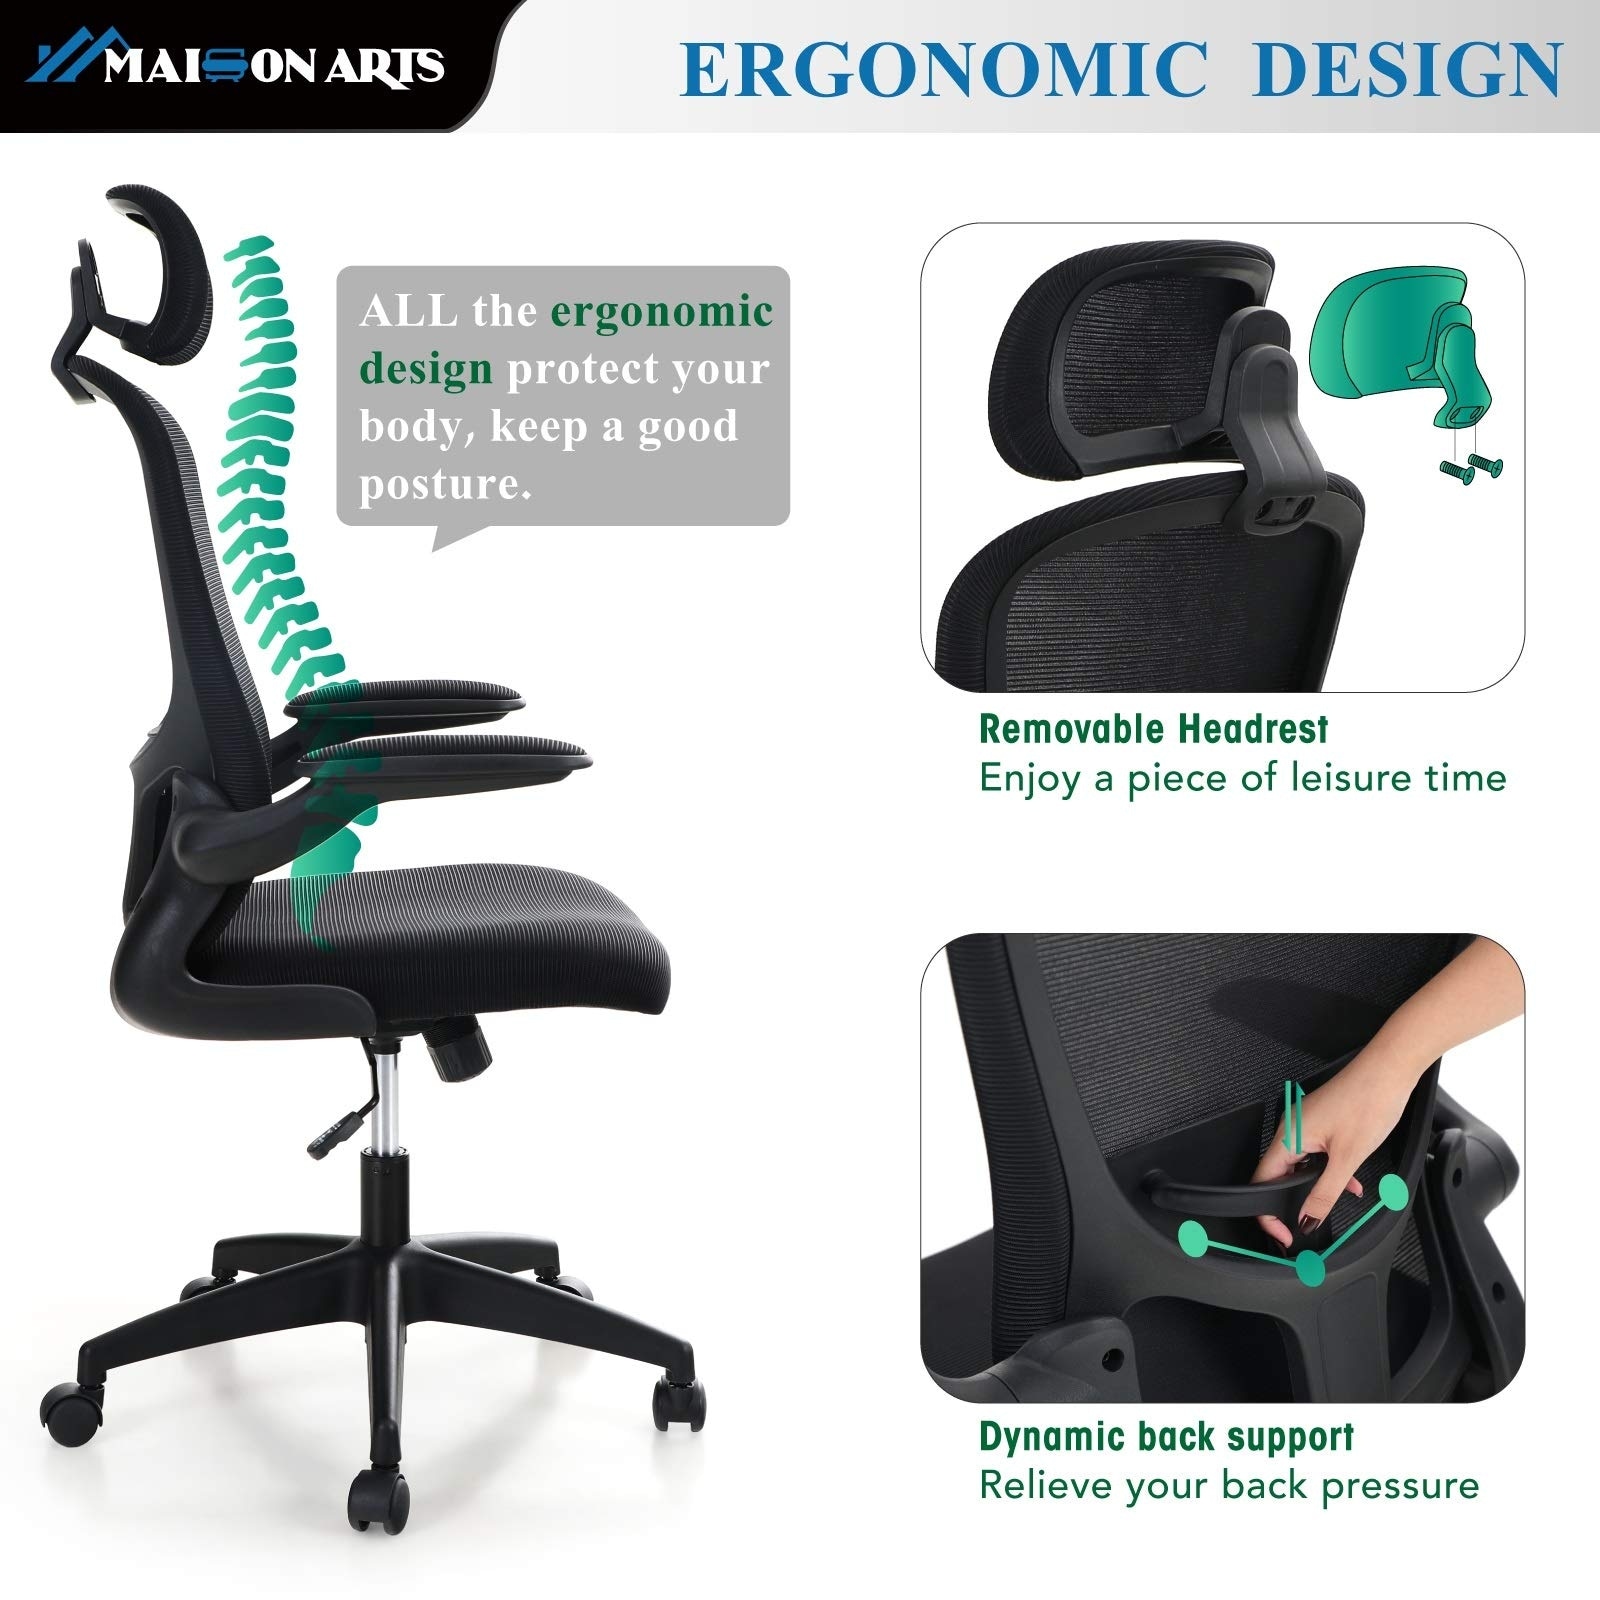 https://ak1.ostkcdn.com/images/products/is/images/direct/dc4430db1ded810e9711f770de378399137183af/MAISON-ARTS-Ergonomic-Mesh-Office-Desk-Chair-High-Back%2C-360%C2%B0-Swivel-Executive-Chair-Adjustable-Lumbar-Support-%26-Headrest.jpg